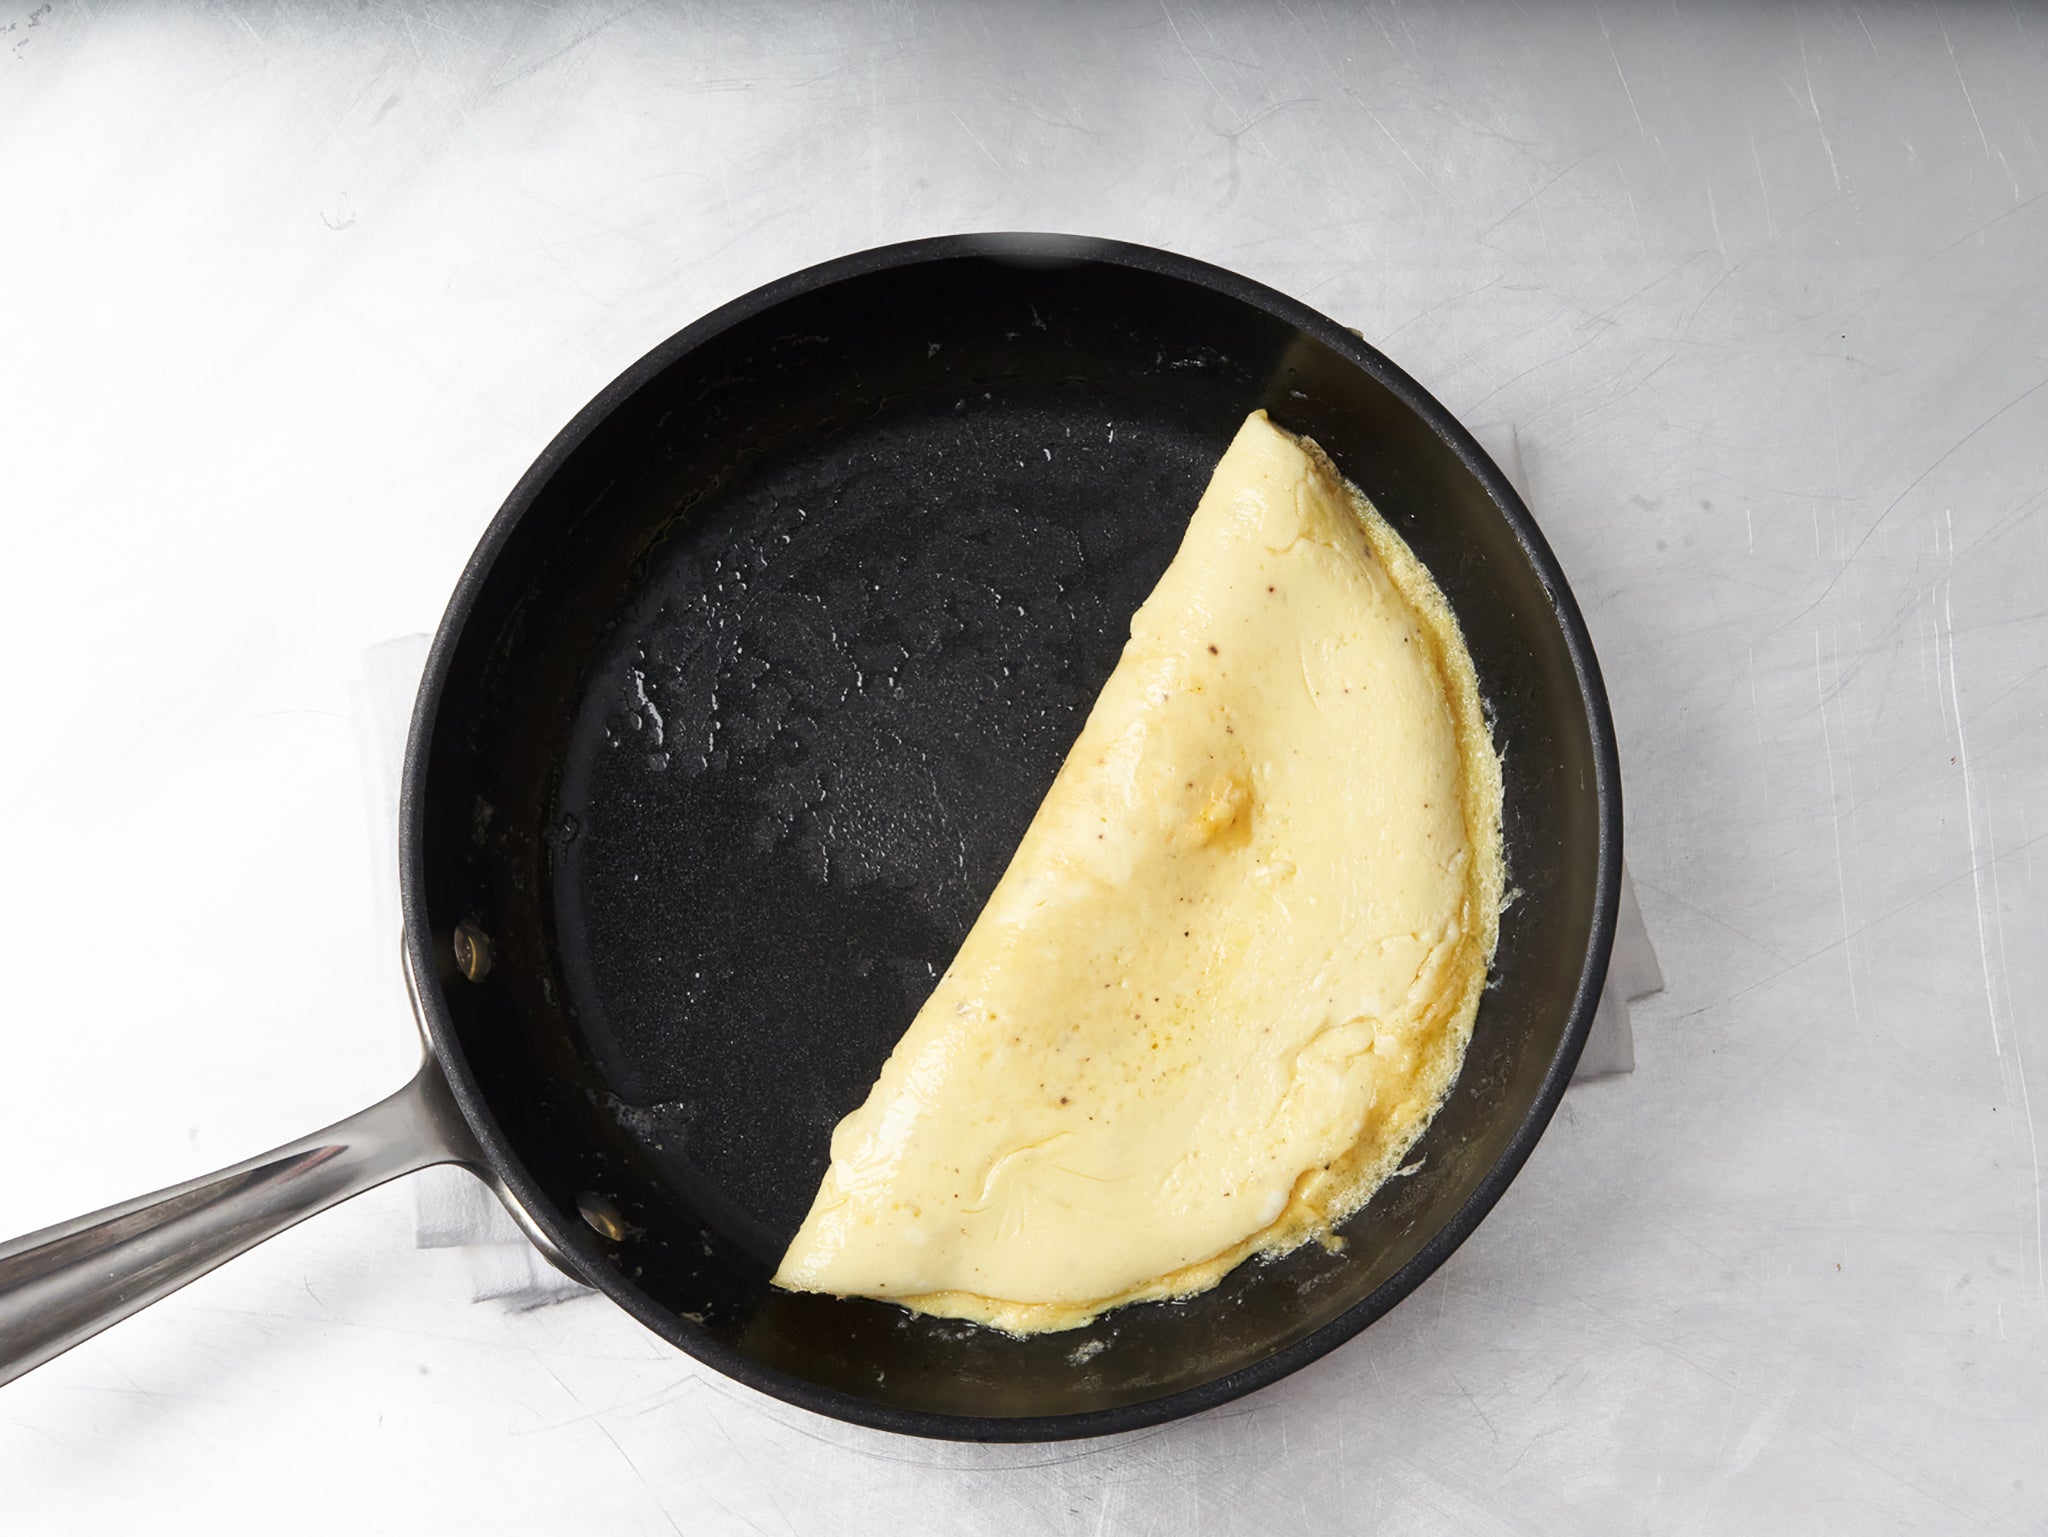 Best Omelette Pans, Best Pans of 2024